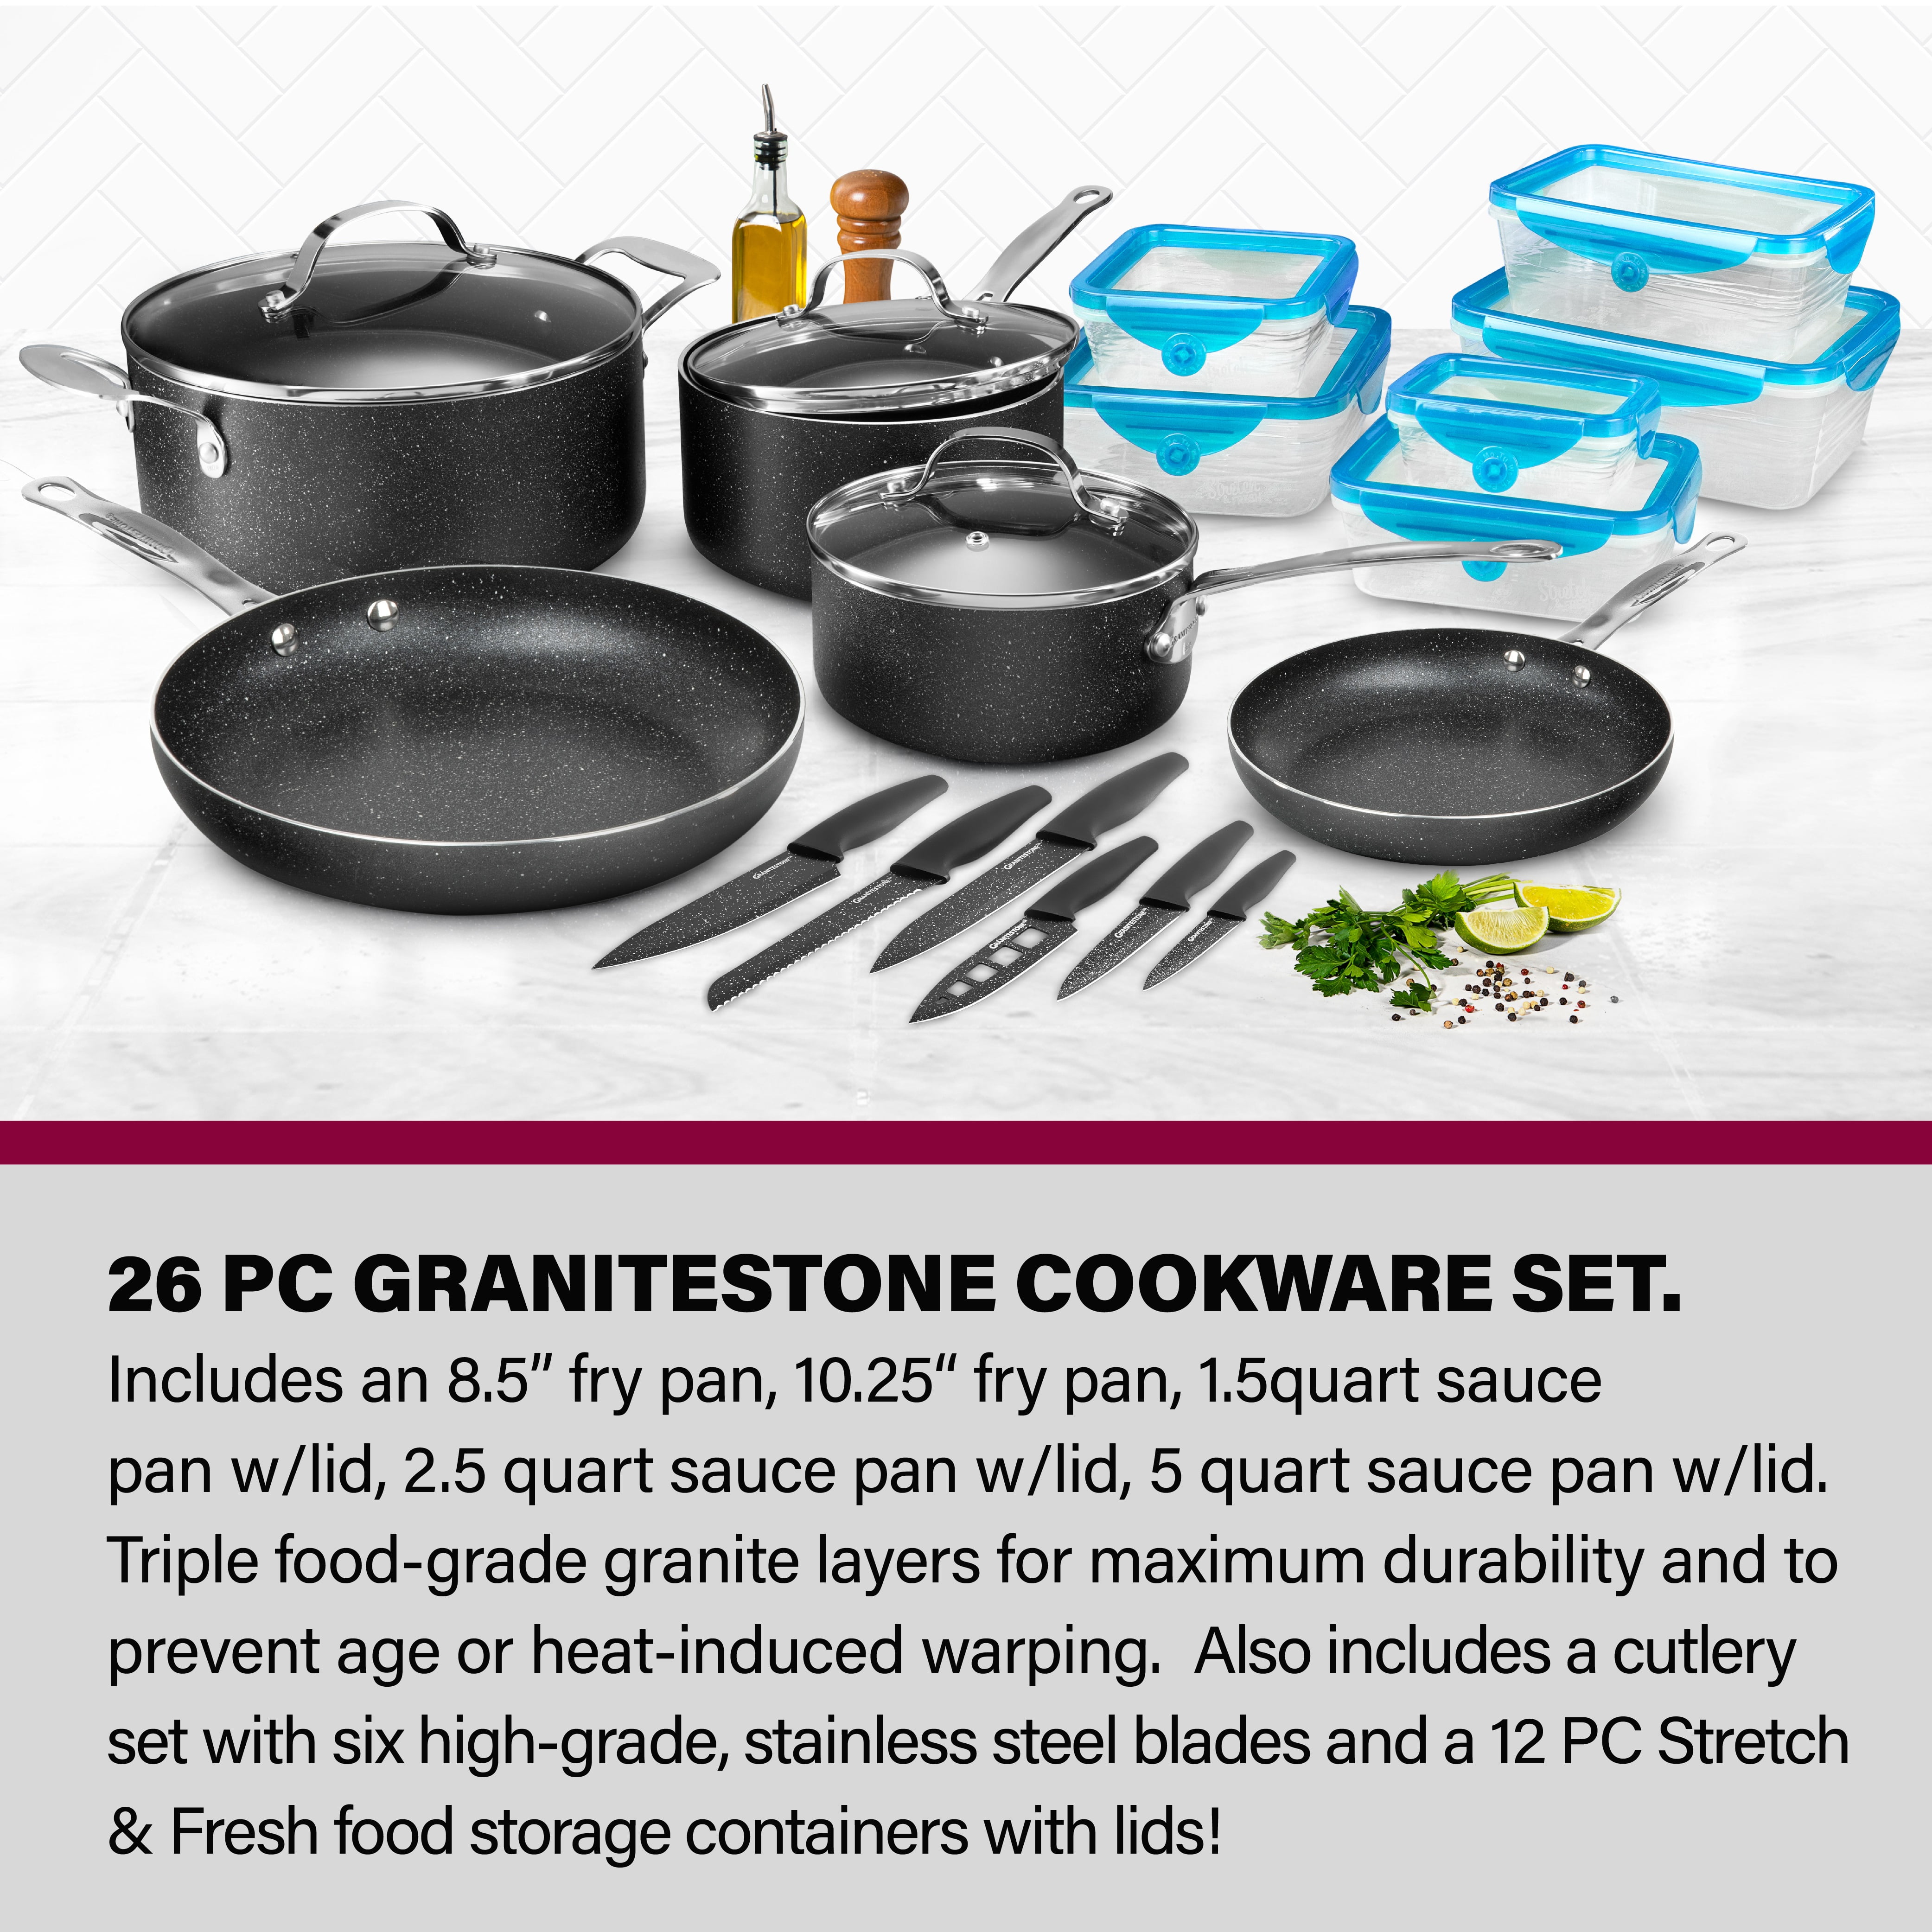 Granitestone Original 16 Pieces Set Includes 10 Pieces Stack Master Triple  Layer Nonstick Dishwasher Oven Safe Cookware 6pcs Nutriblade Knife